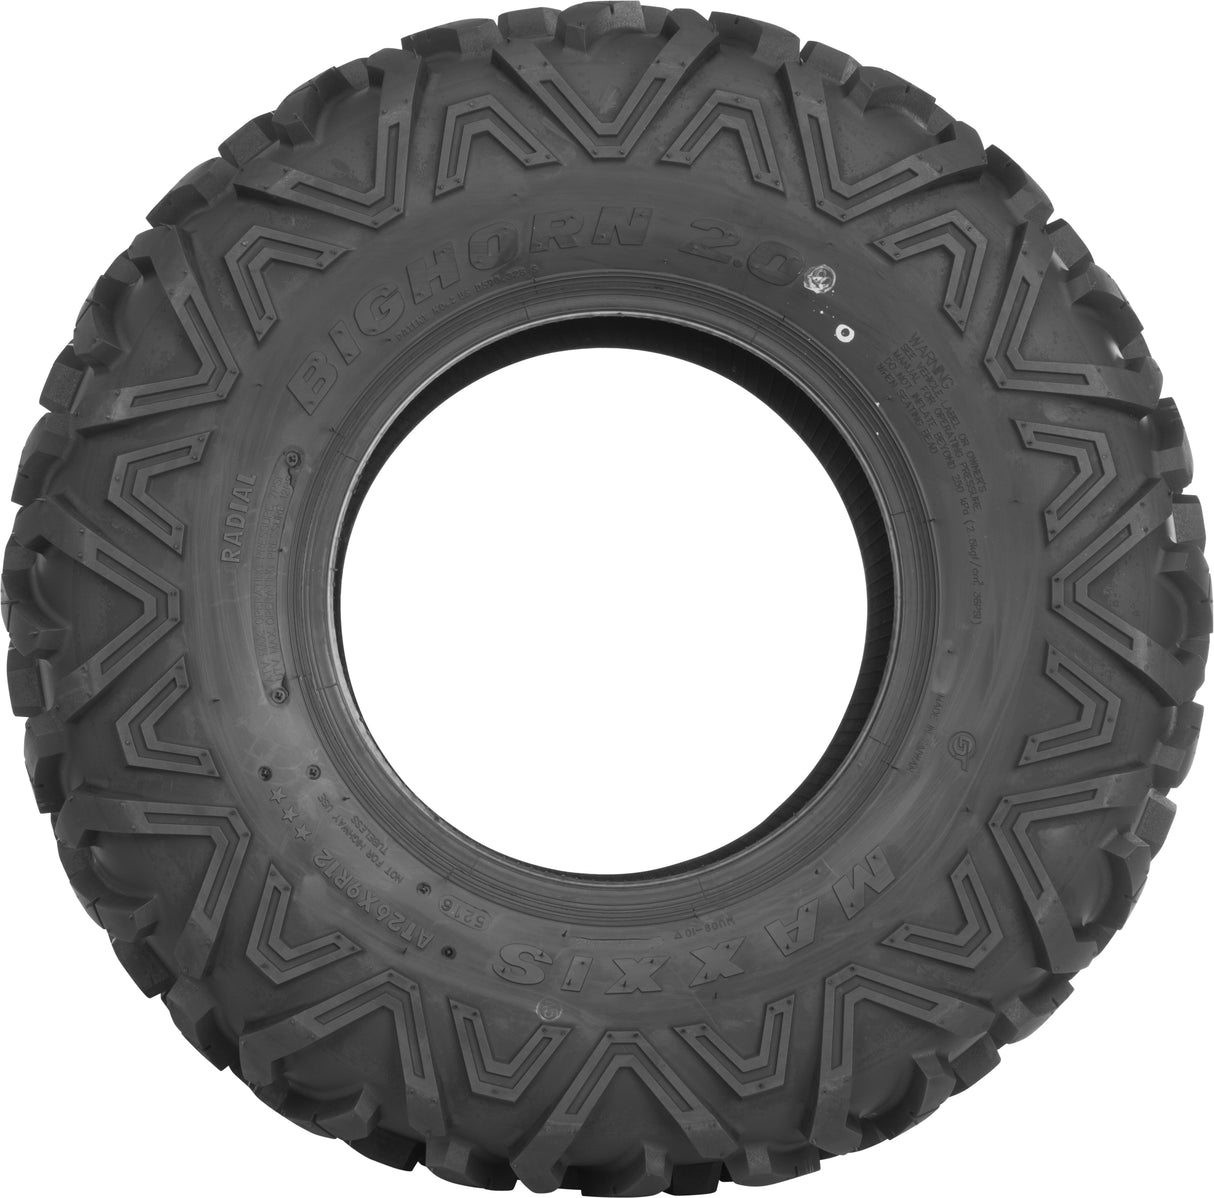 Tire Bighorn 2 Front 26x9r 14 Lr 395lbs Radial